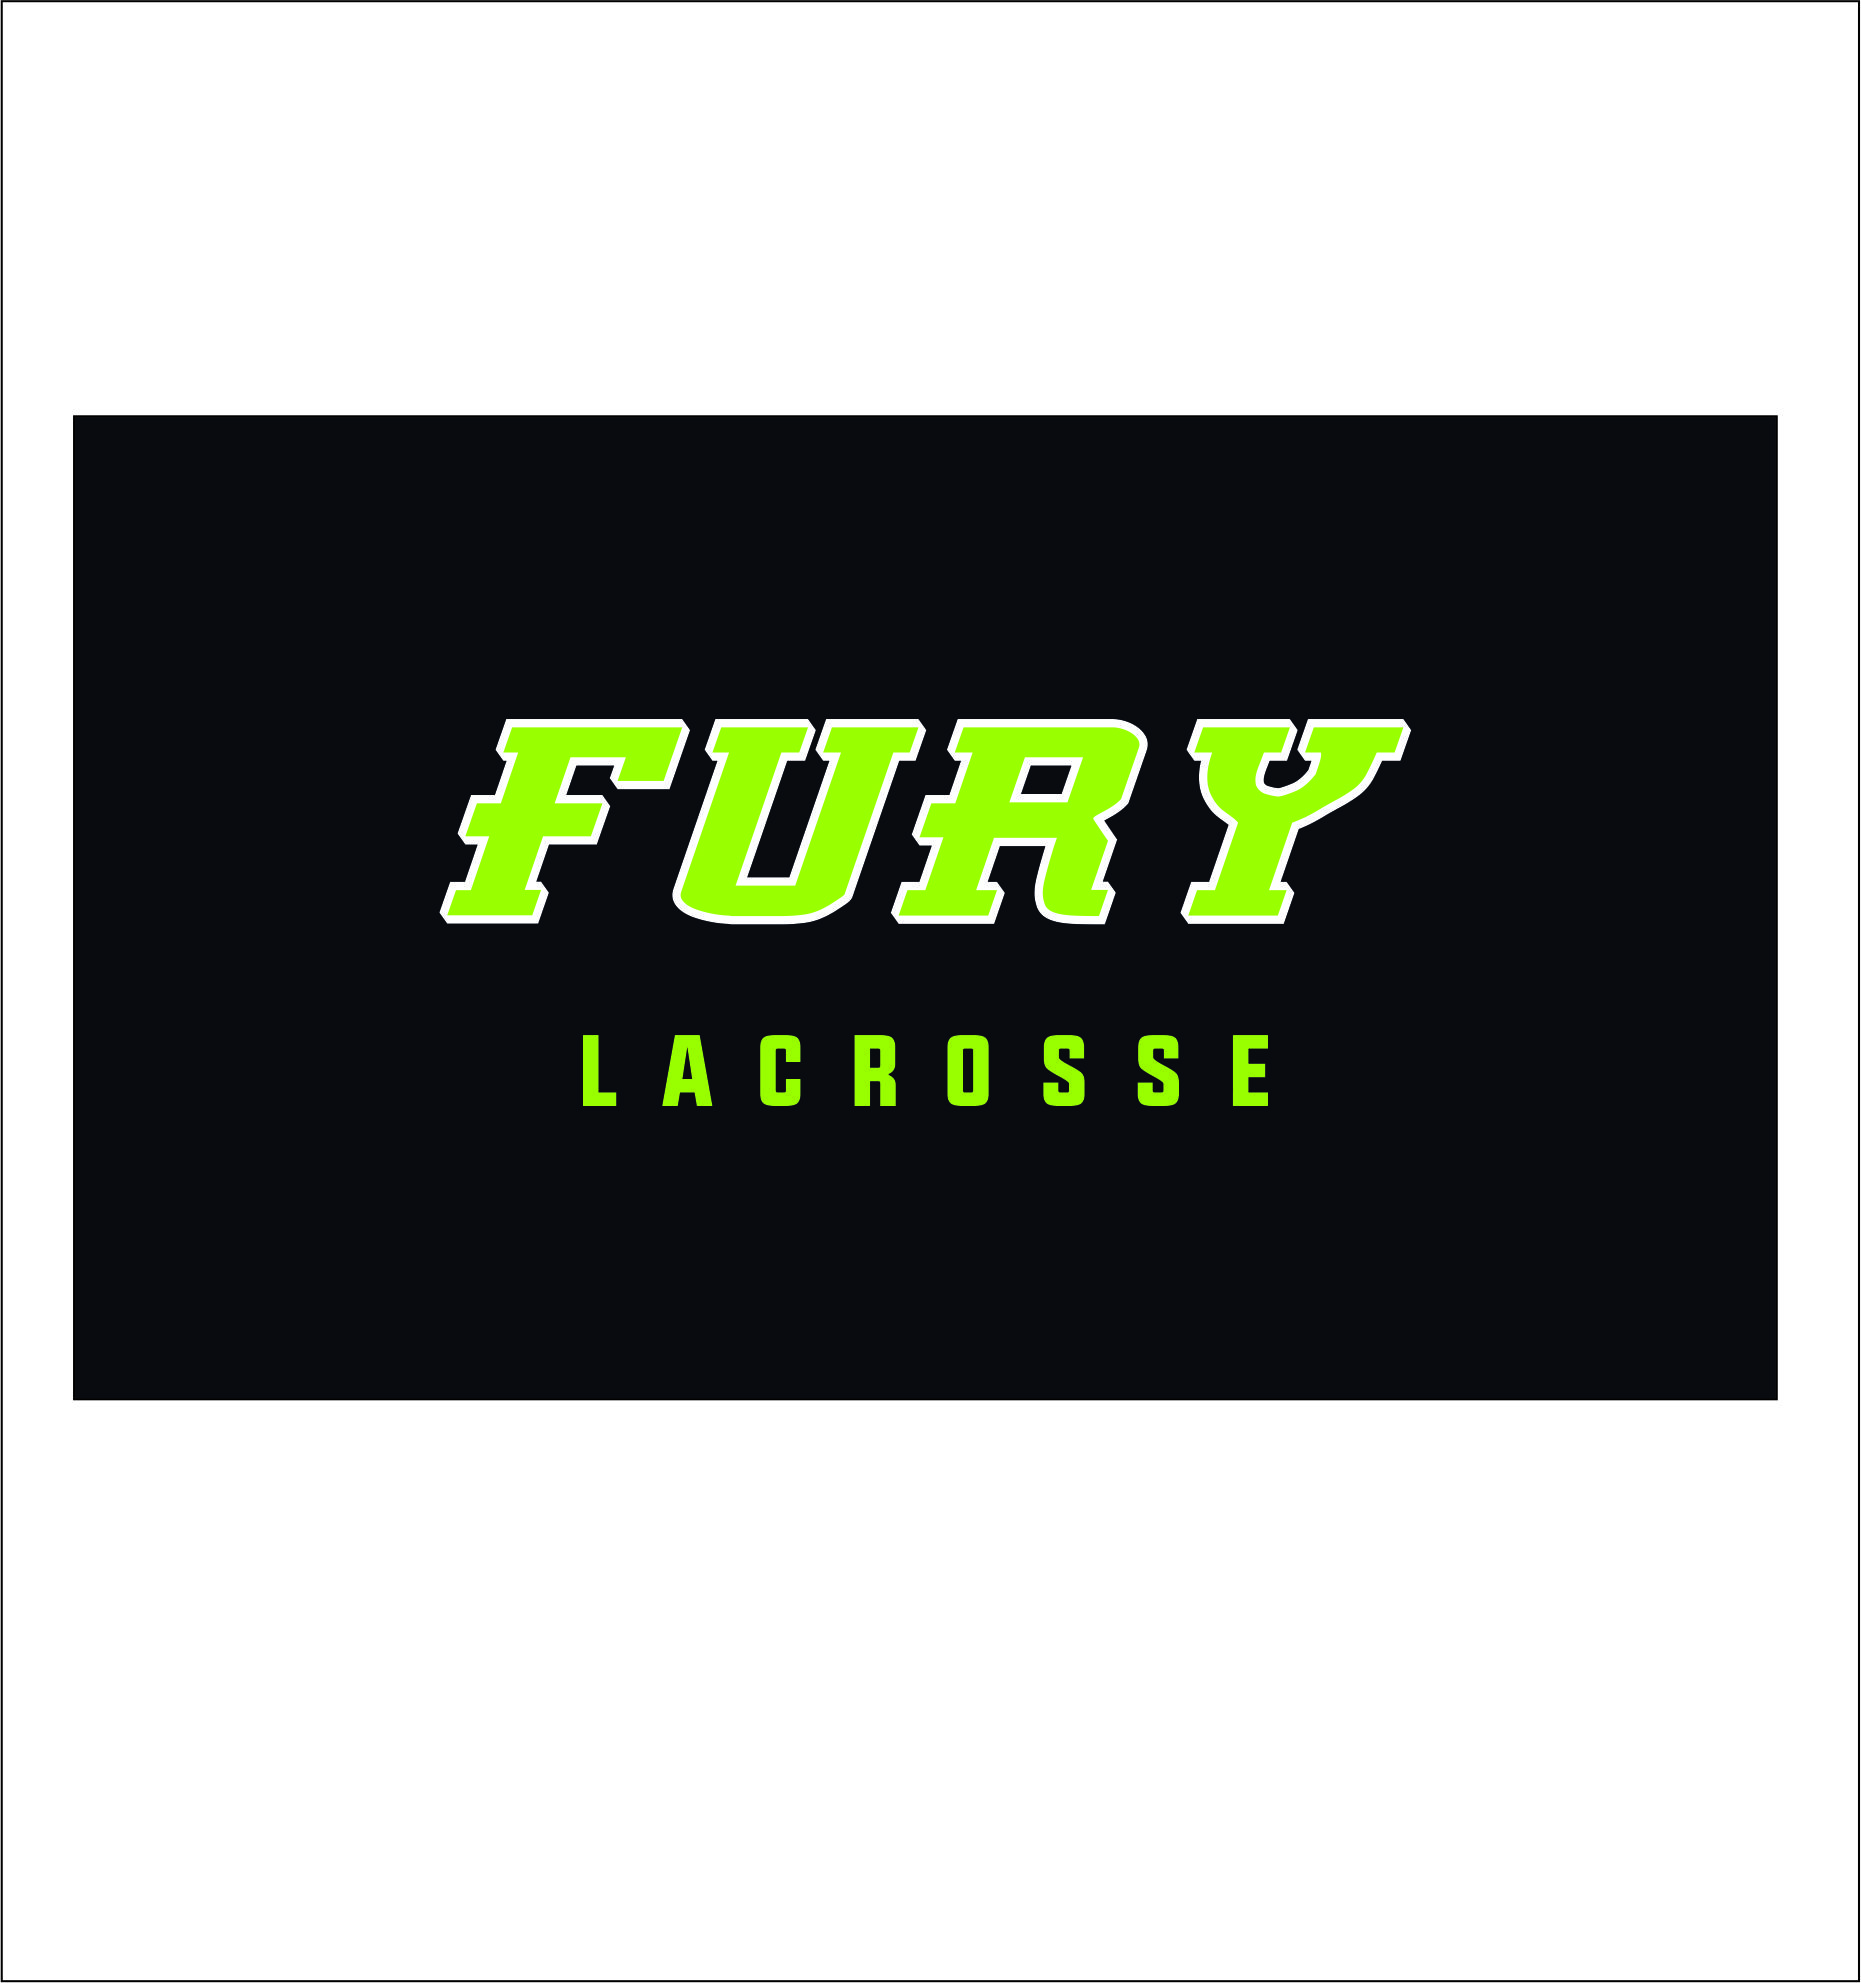  Frisco Fury Lacrosse 